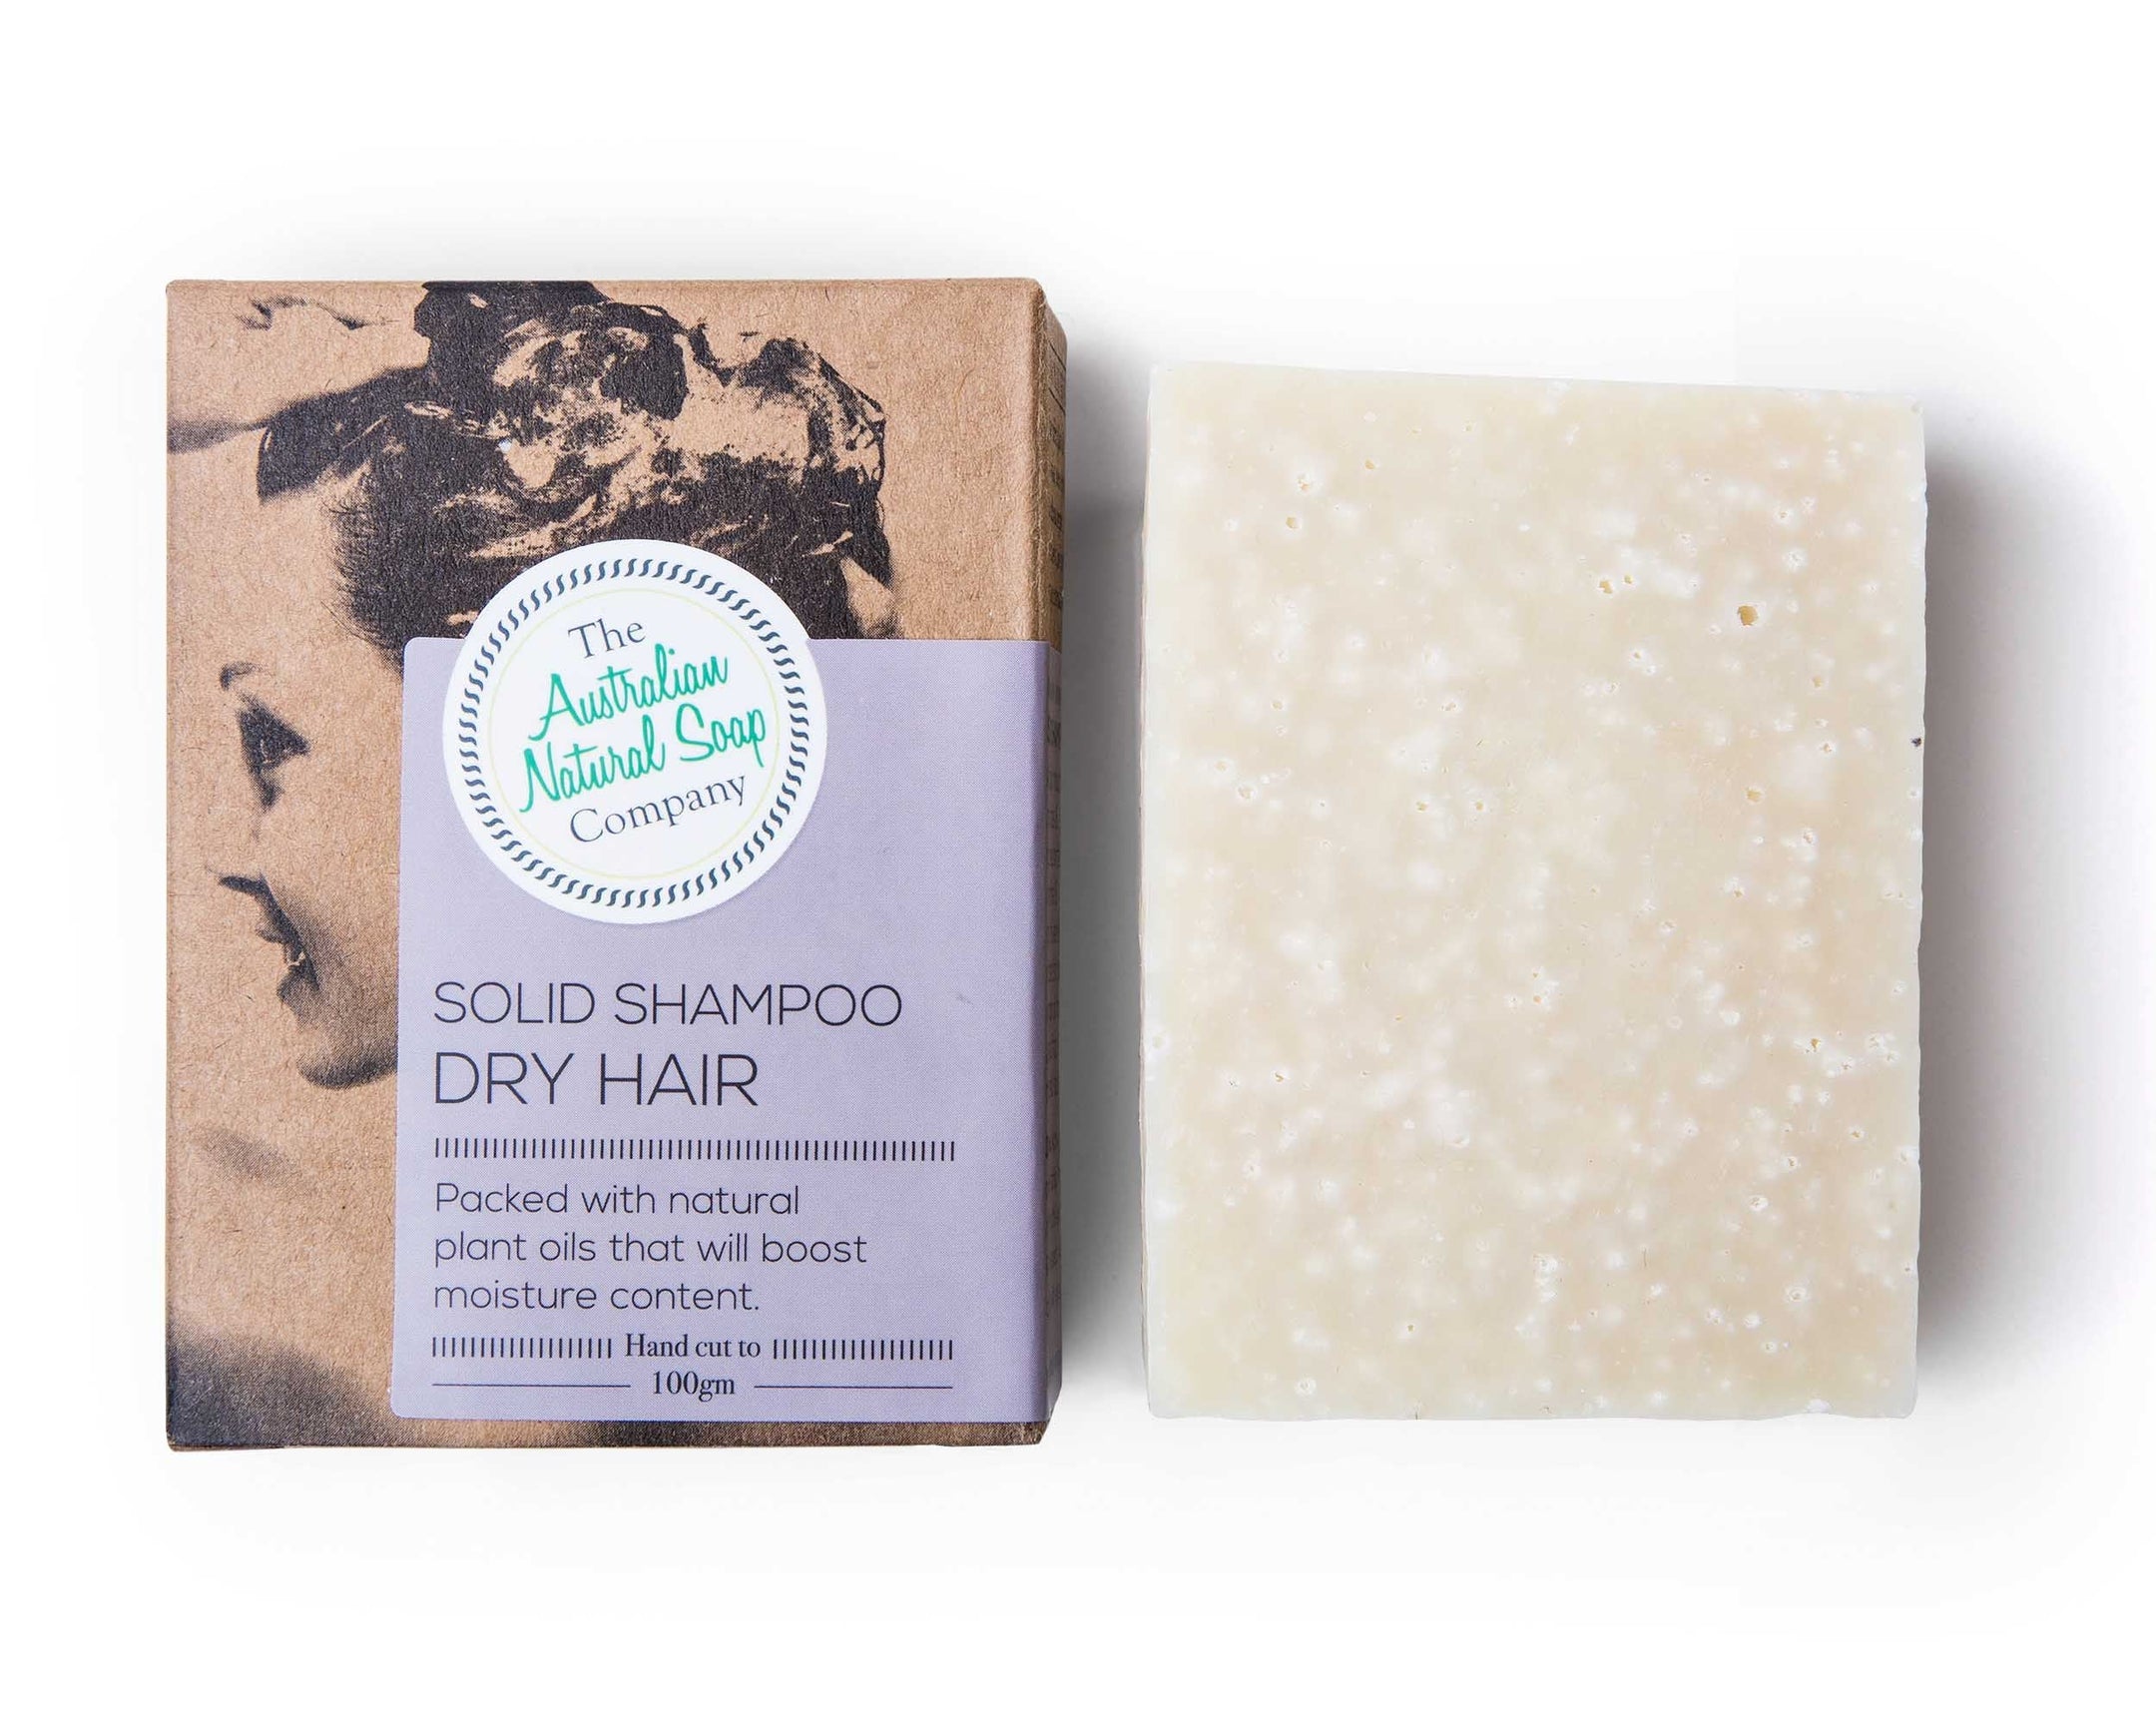 Australian Natural Soap Company shampoo bar for dry hair box and bar